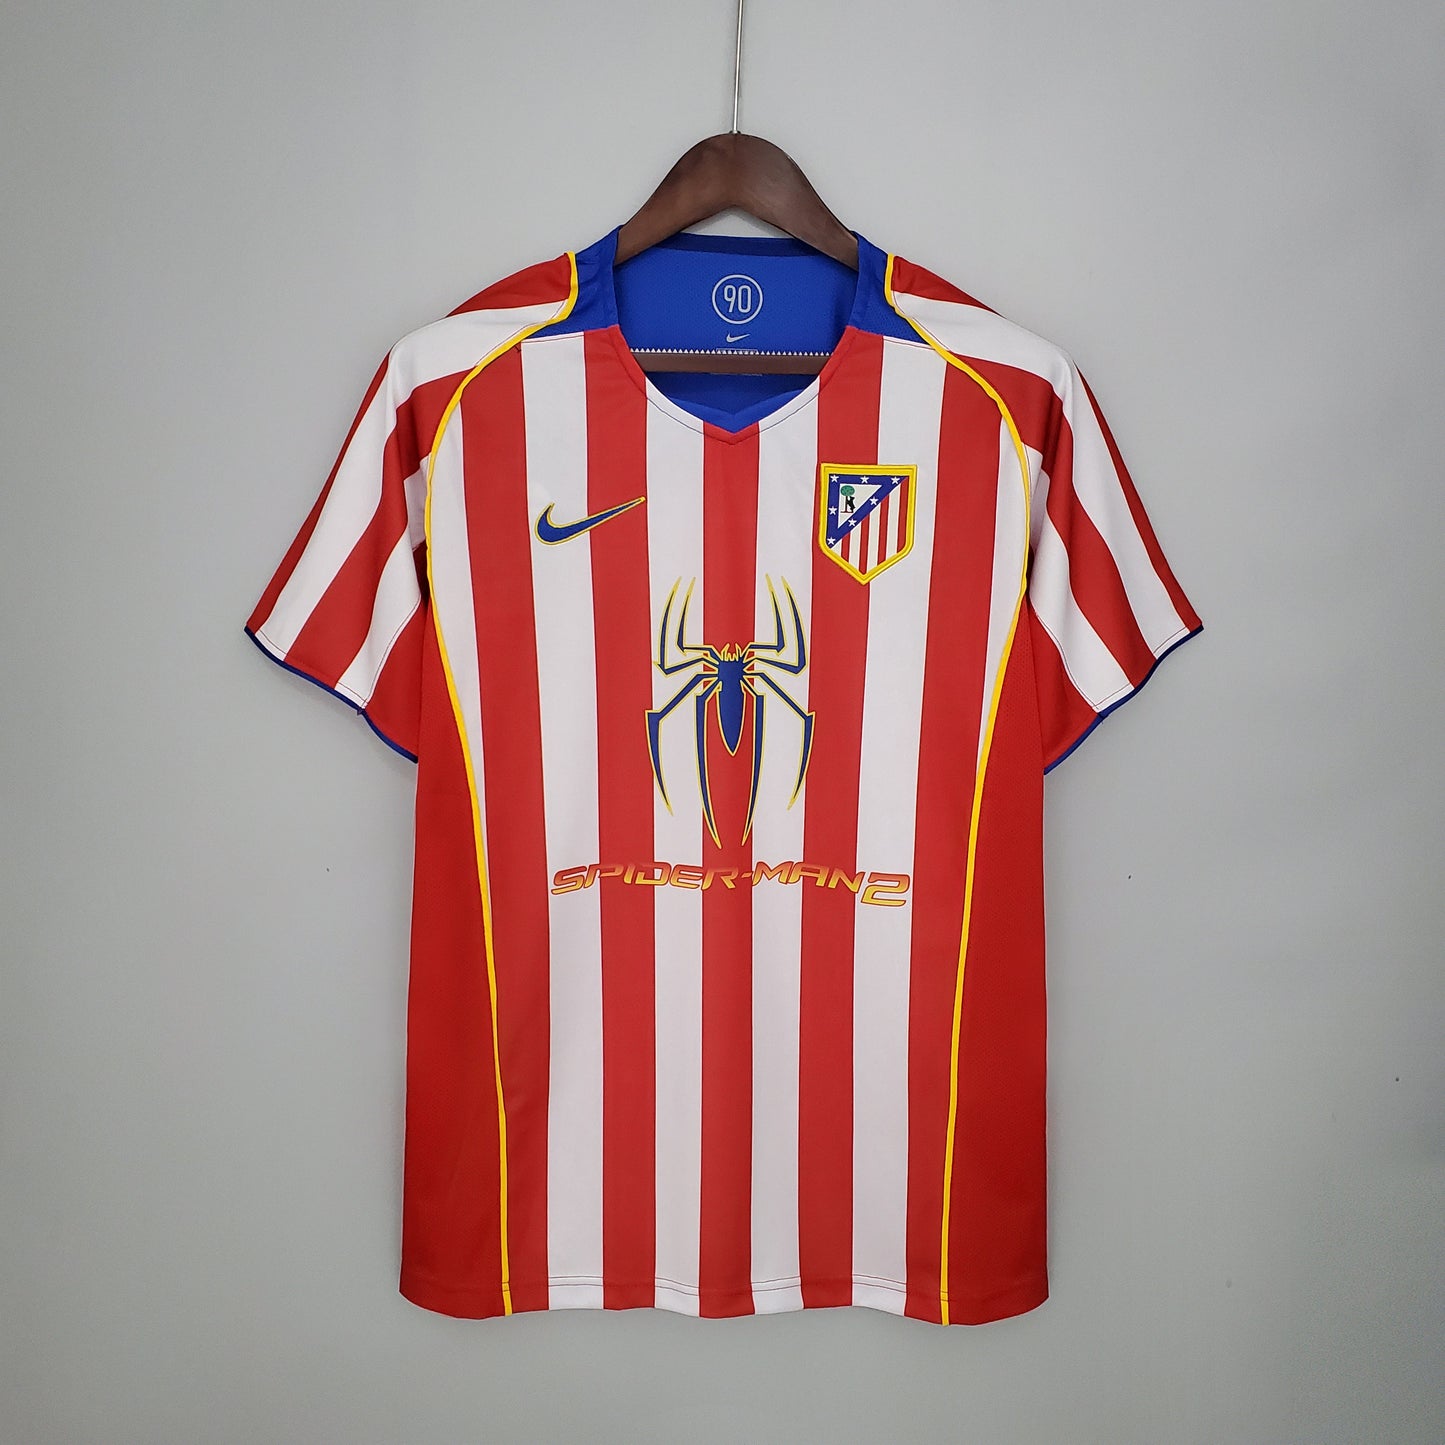 Atletico Madrid Home Kit 04/05